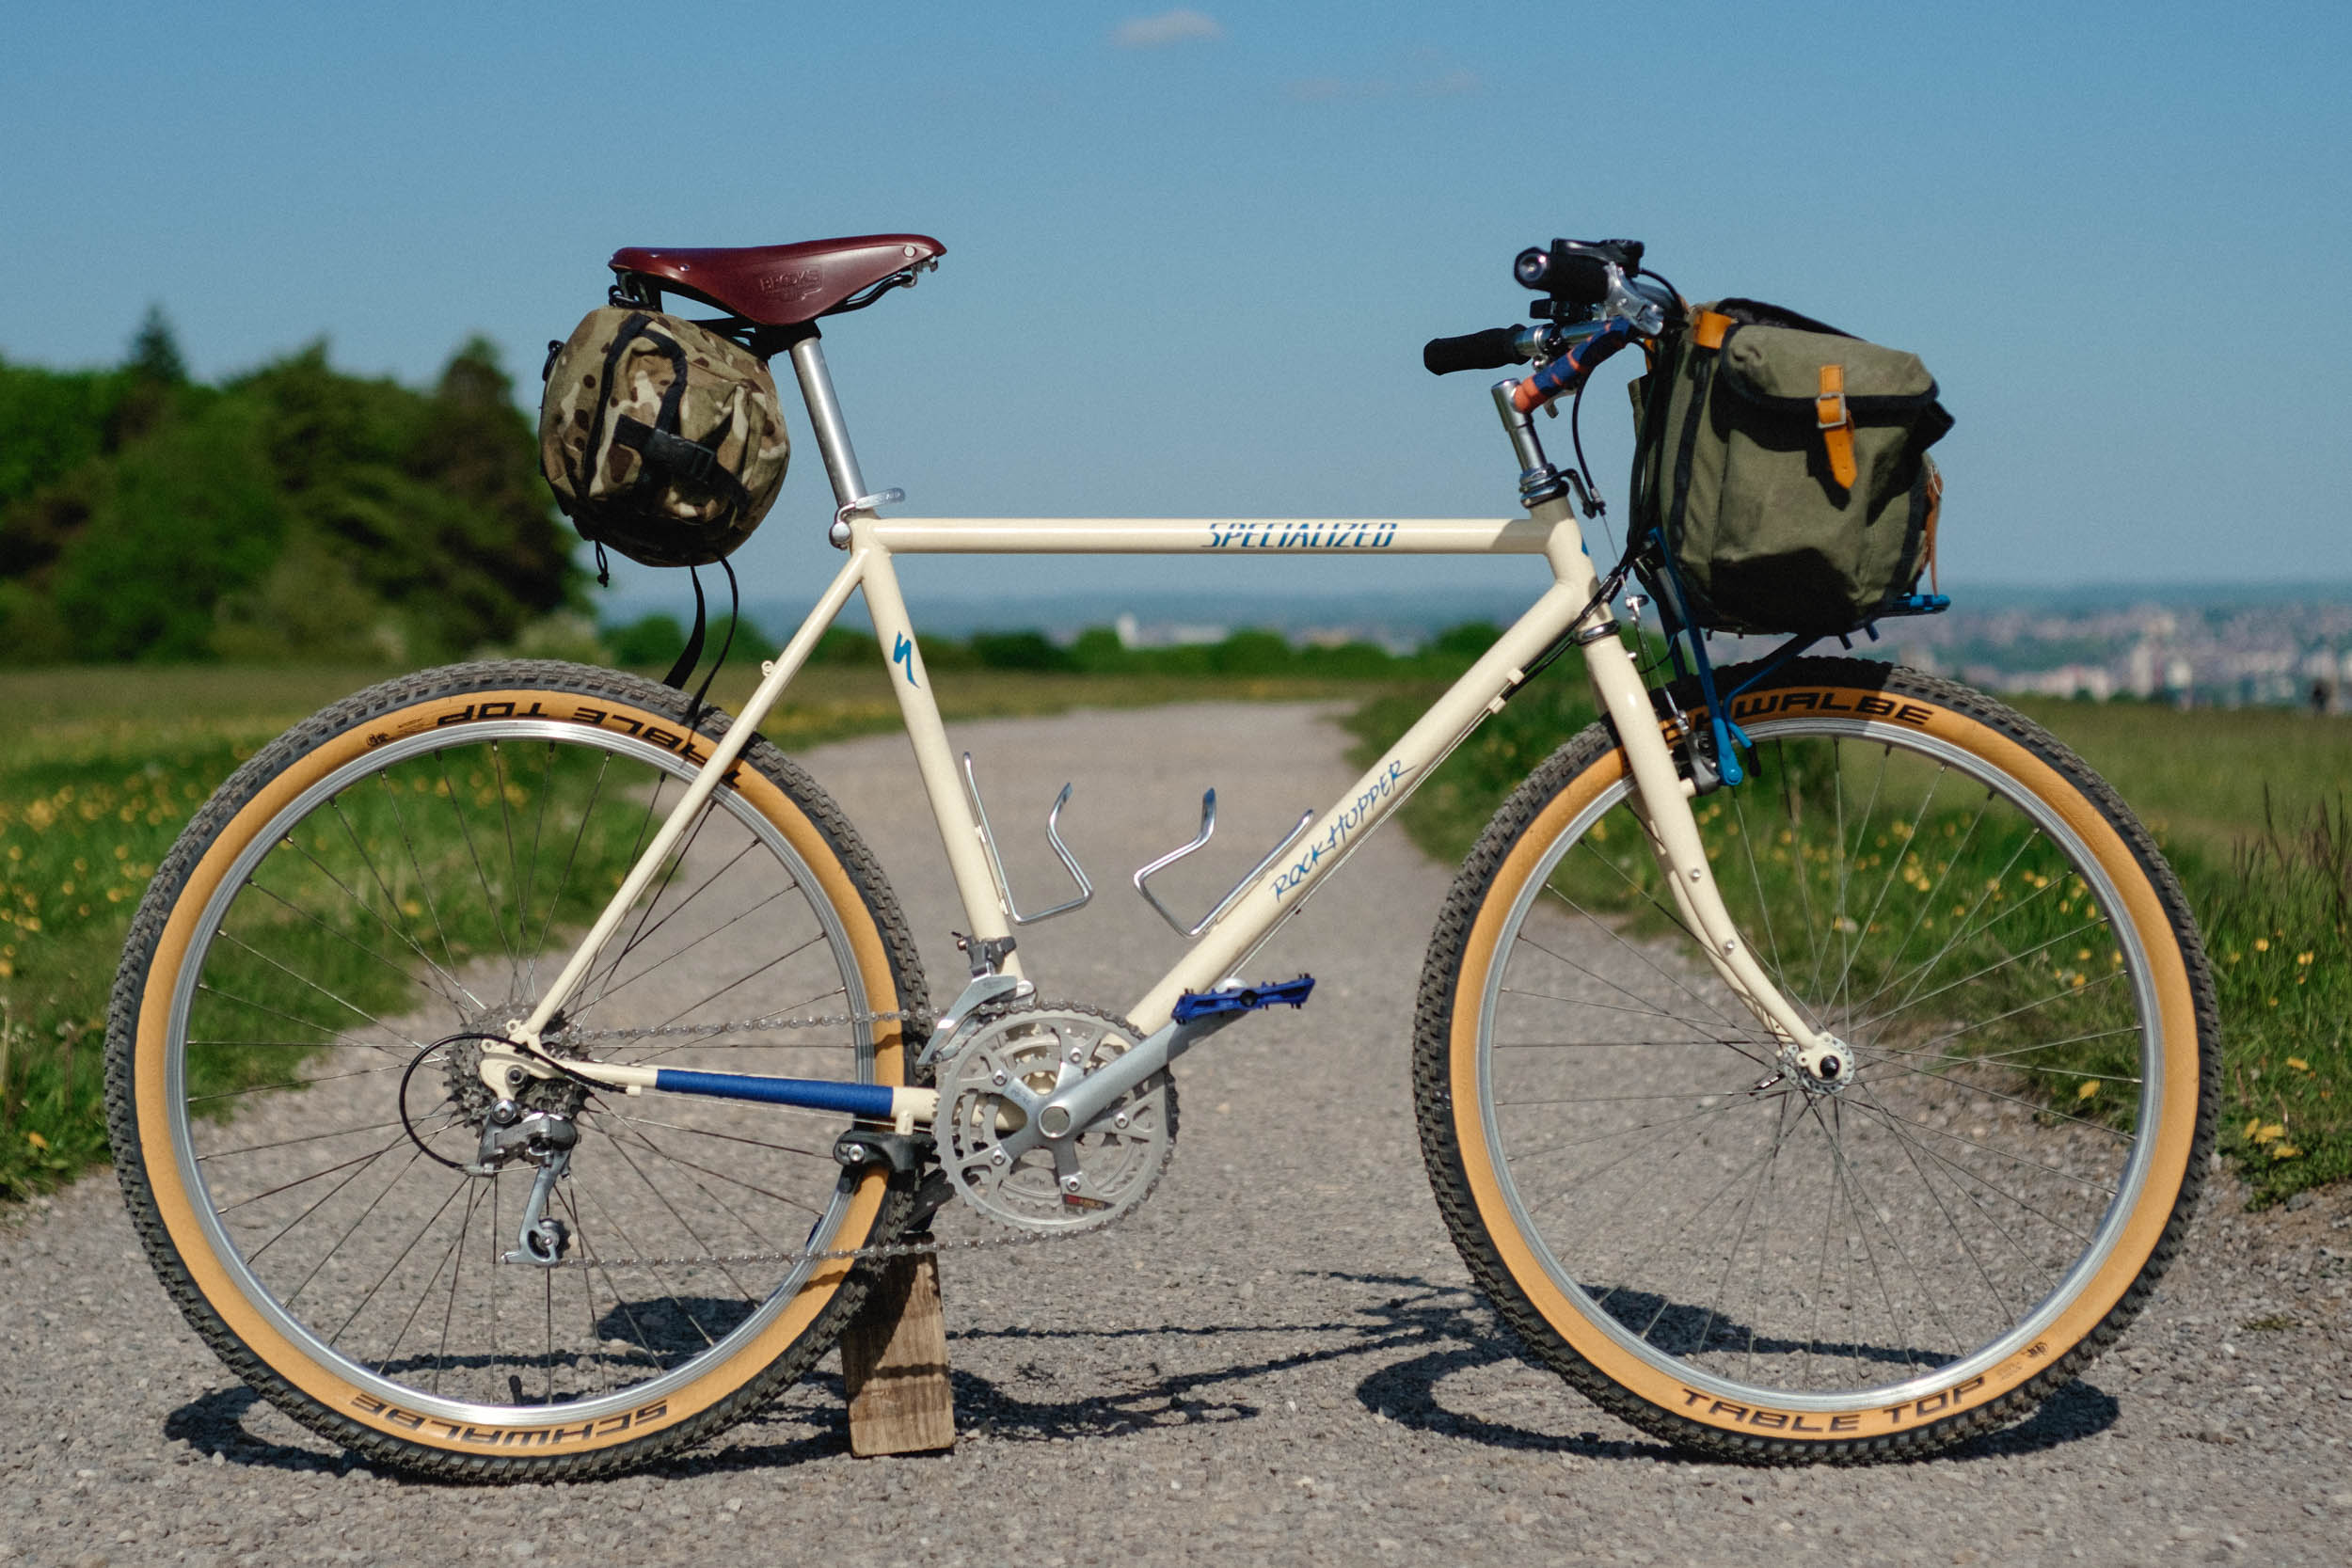 Reader S Rig Will S 1988 Specialized Rockhopper Bikepacking Com